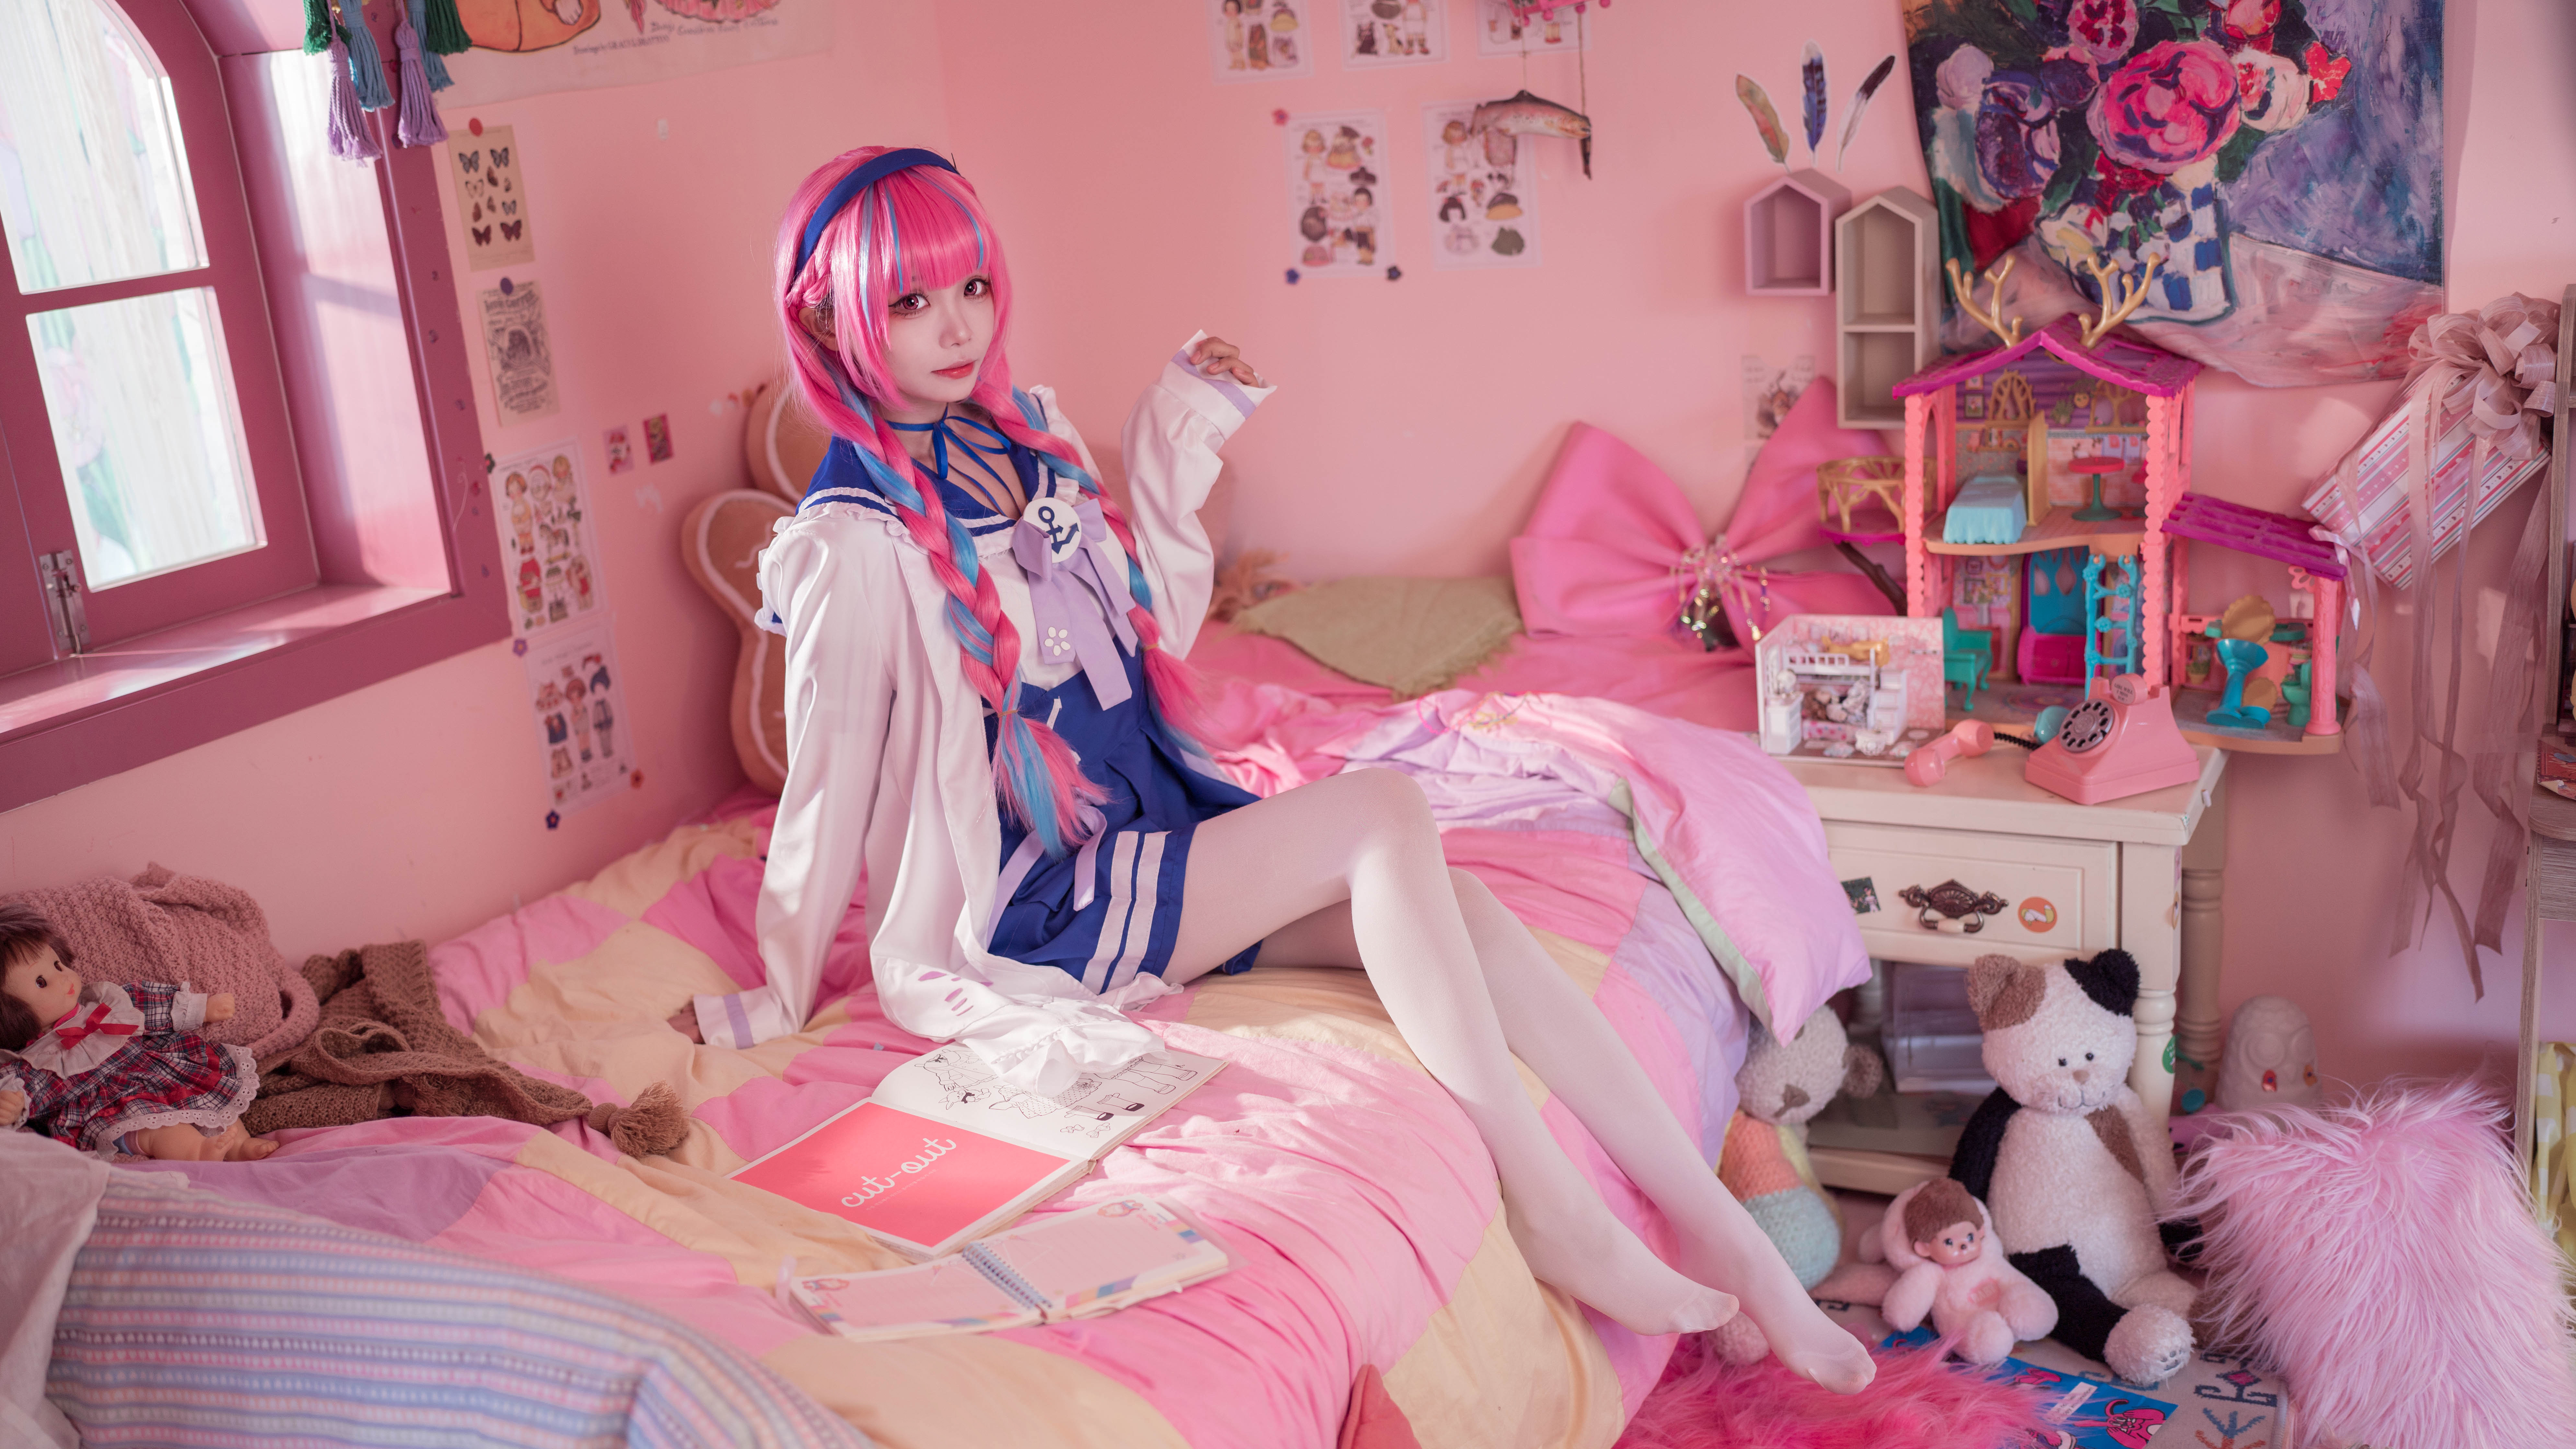 Minato Aqua Pink Hair Asian Cosplay Maid Outfit Women Legs Feet Indoors 7952x4472